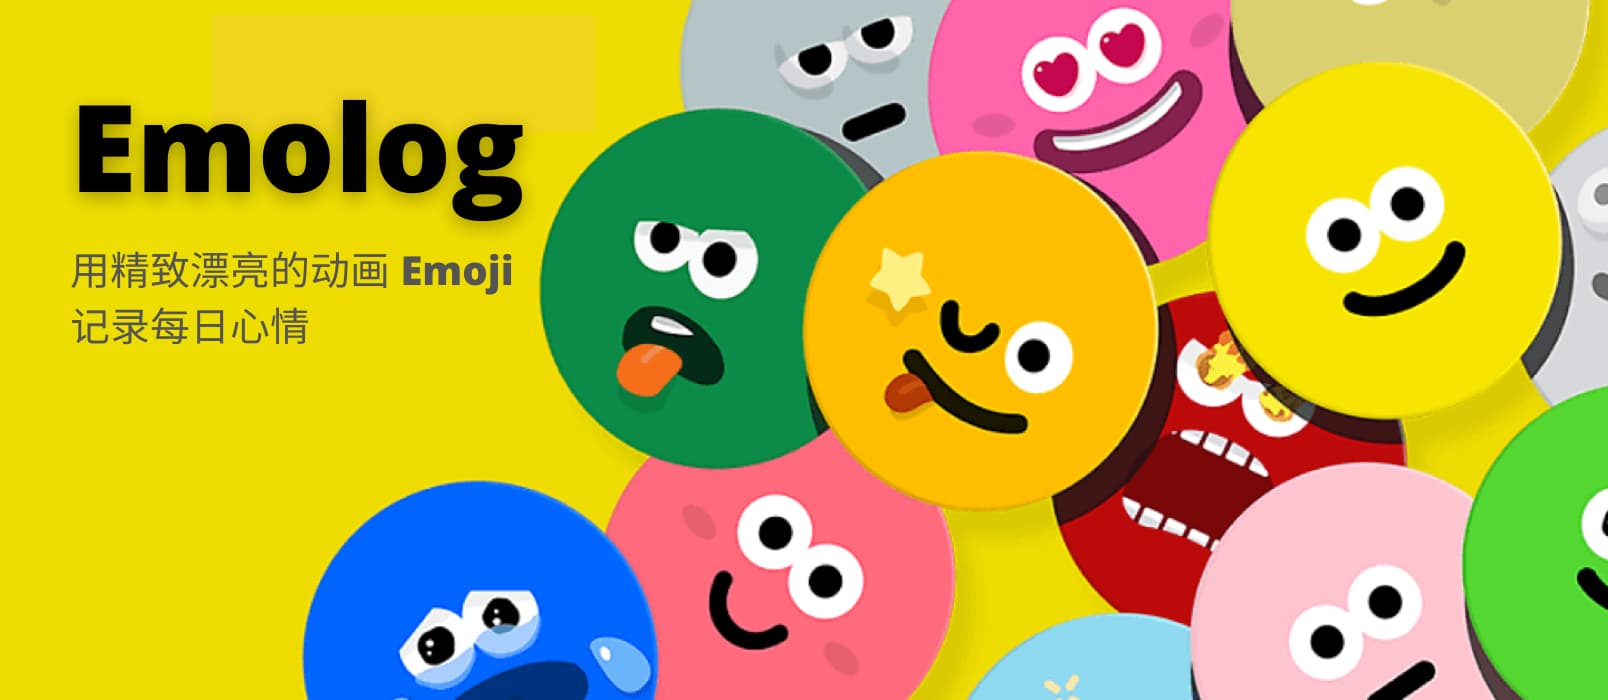 Emolog - 用精致漂亮的动画 Emoji 记录每日心情